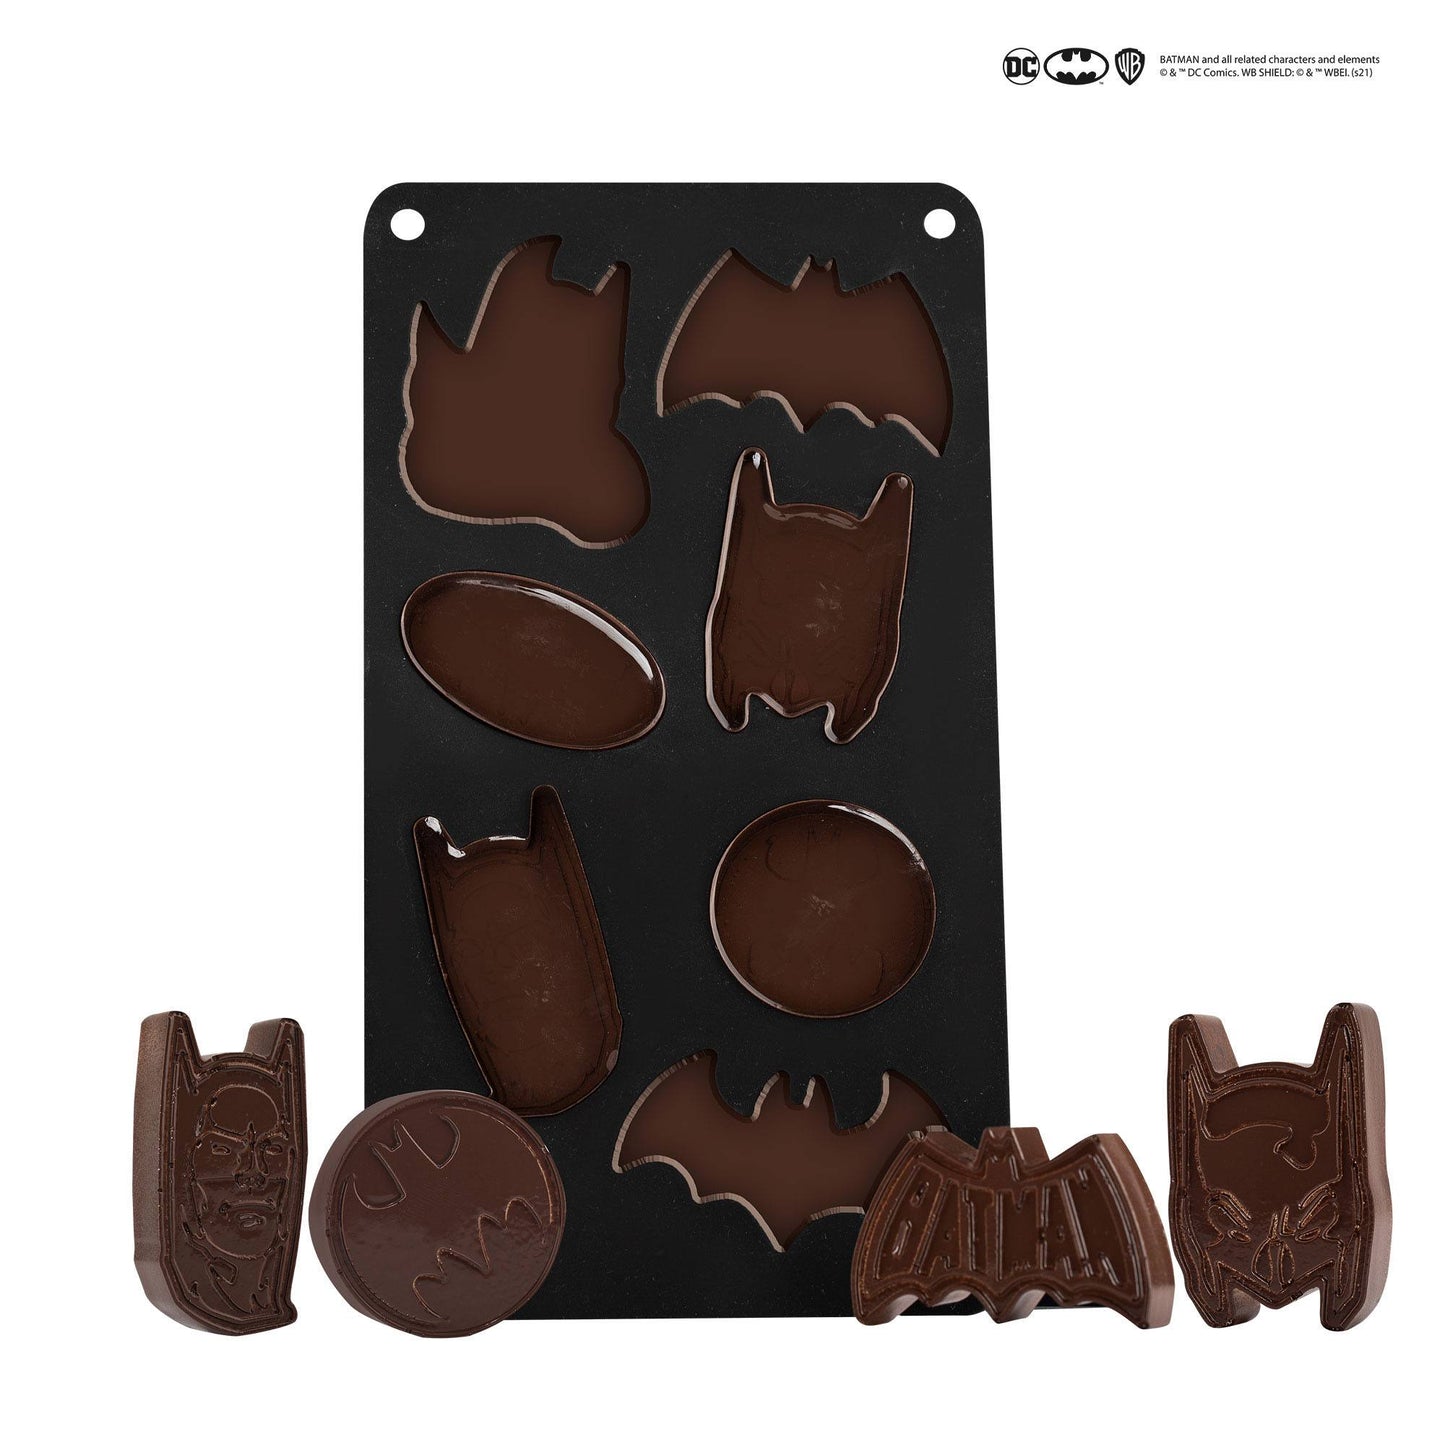 Batman Chocolate / Ice Cube Mold